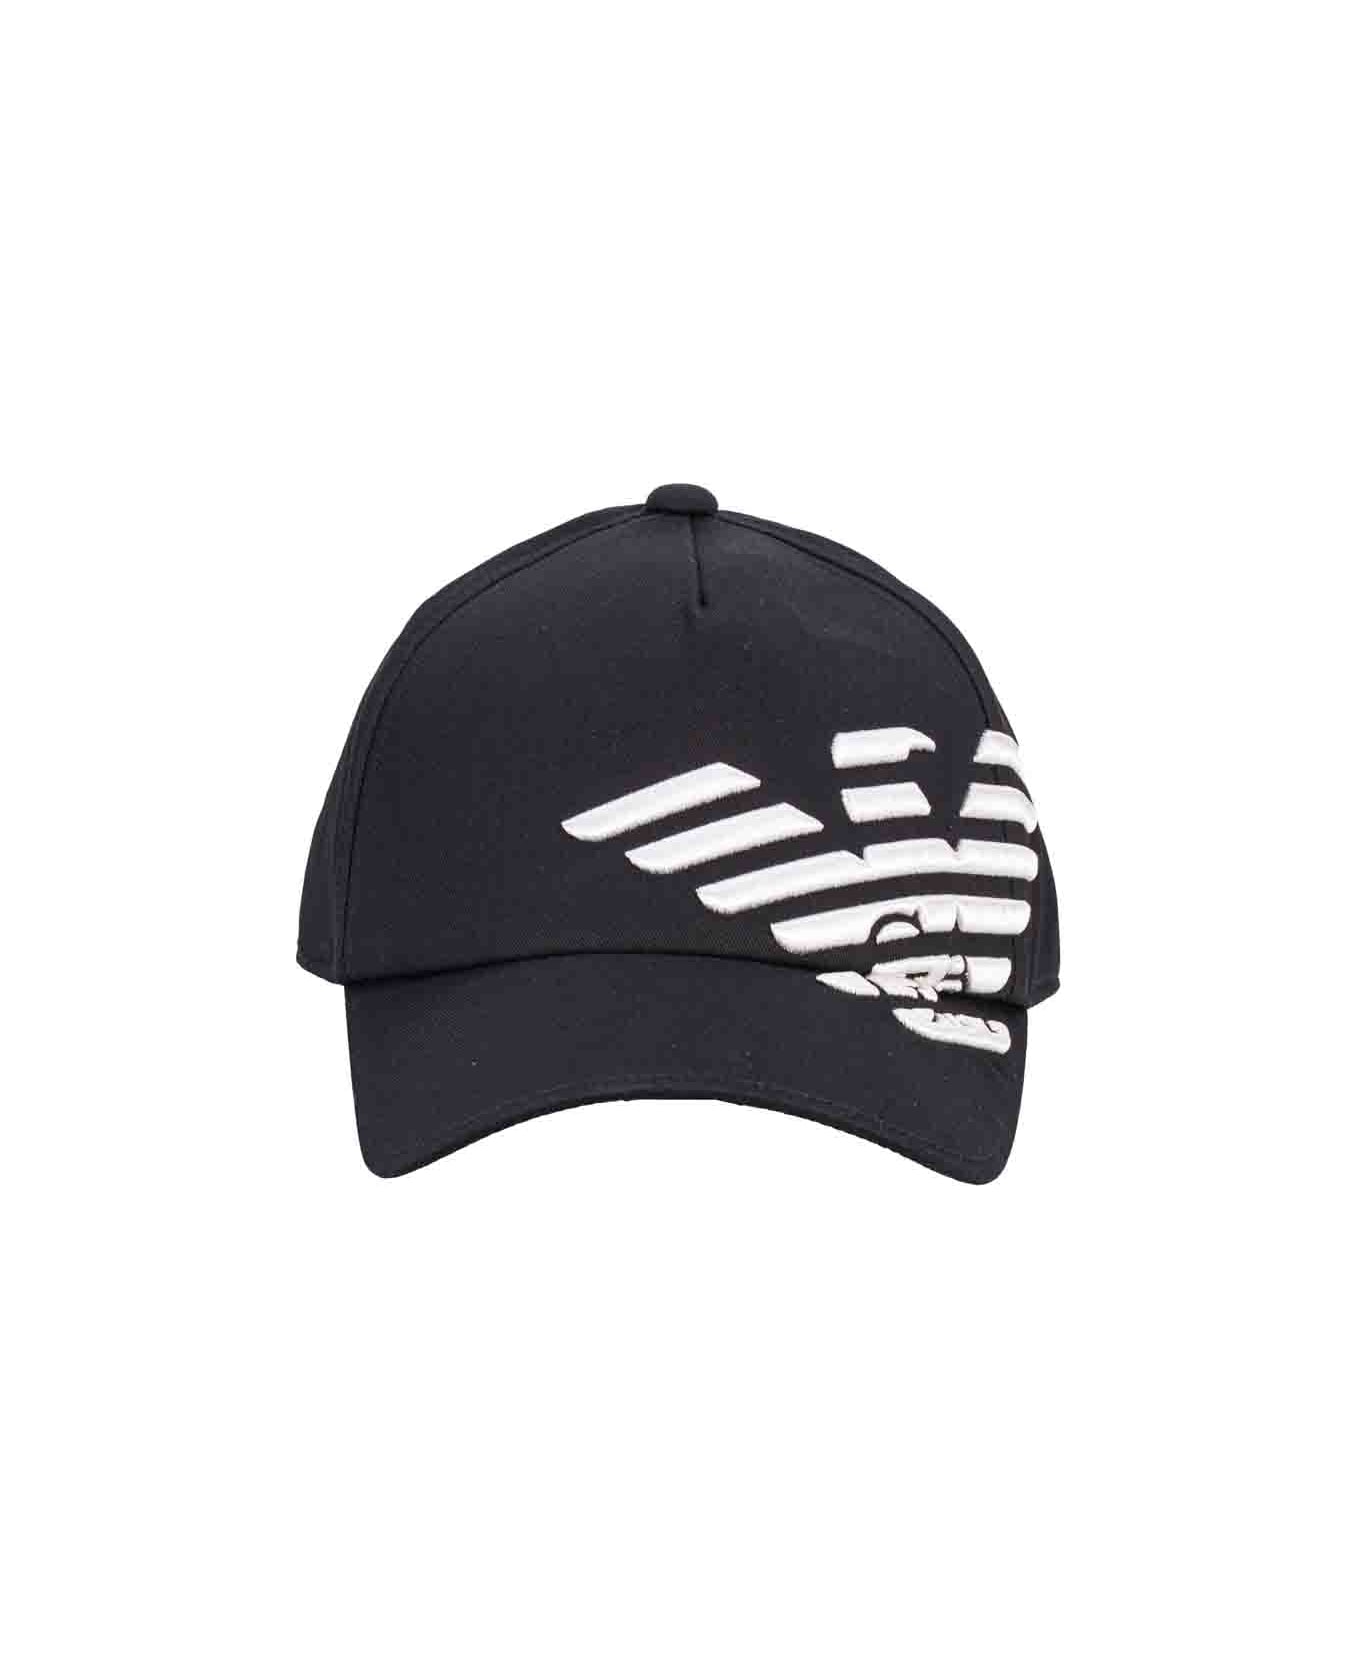 Emporio Armani Hats Black - Black